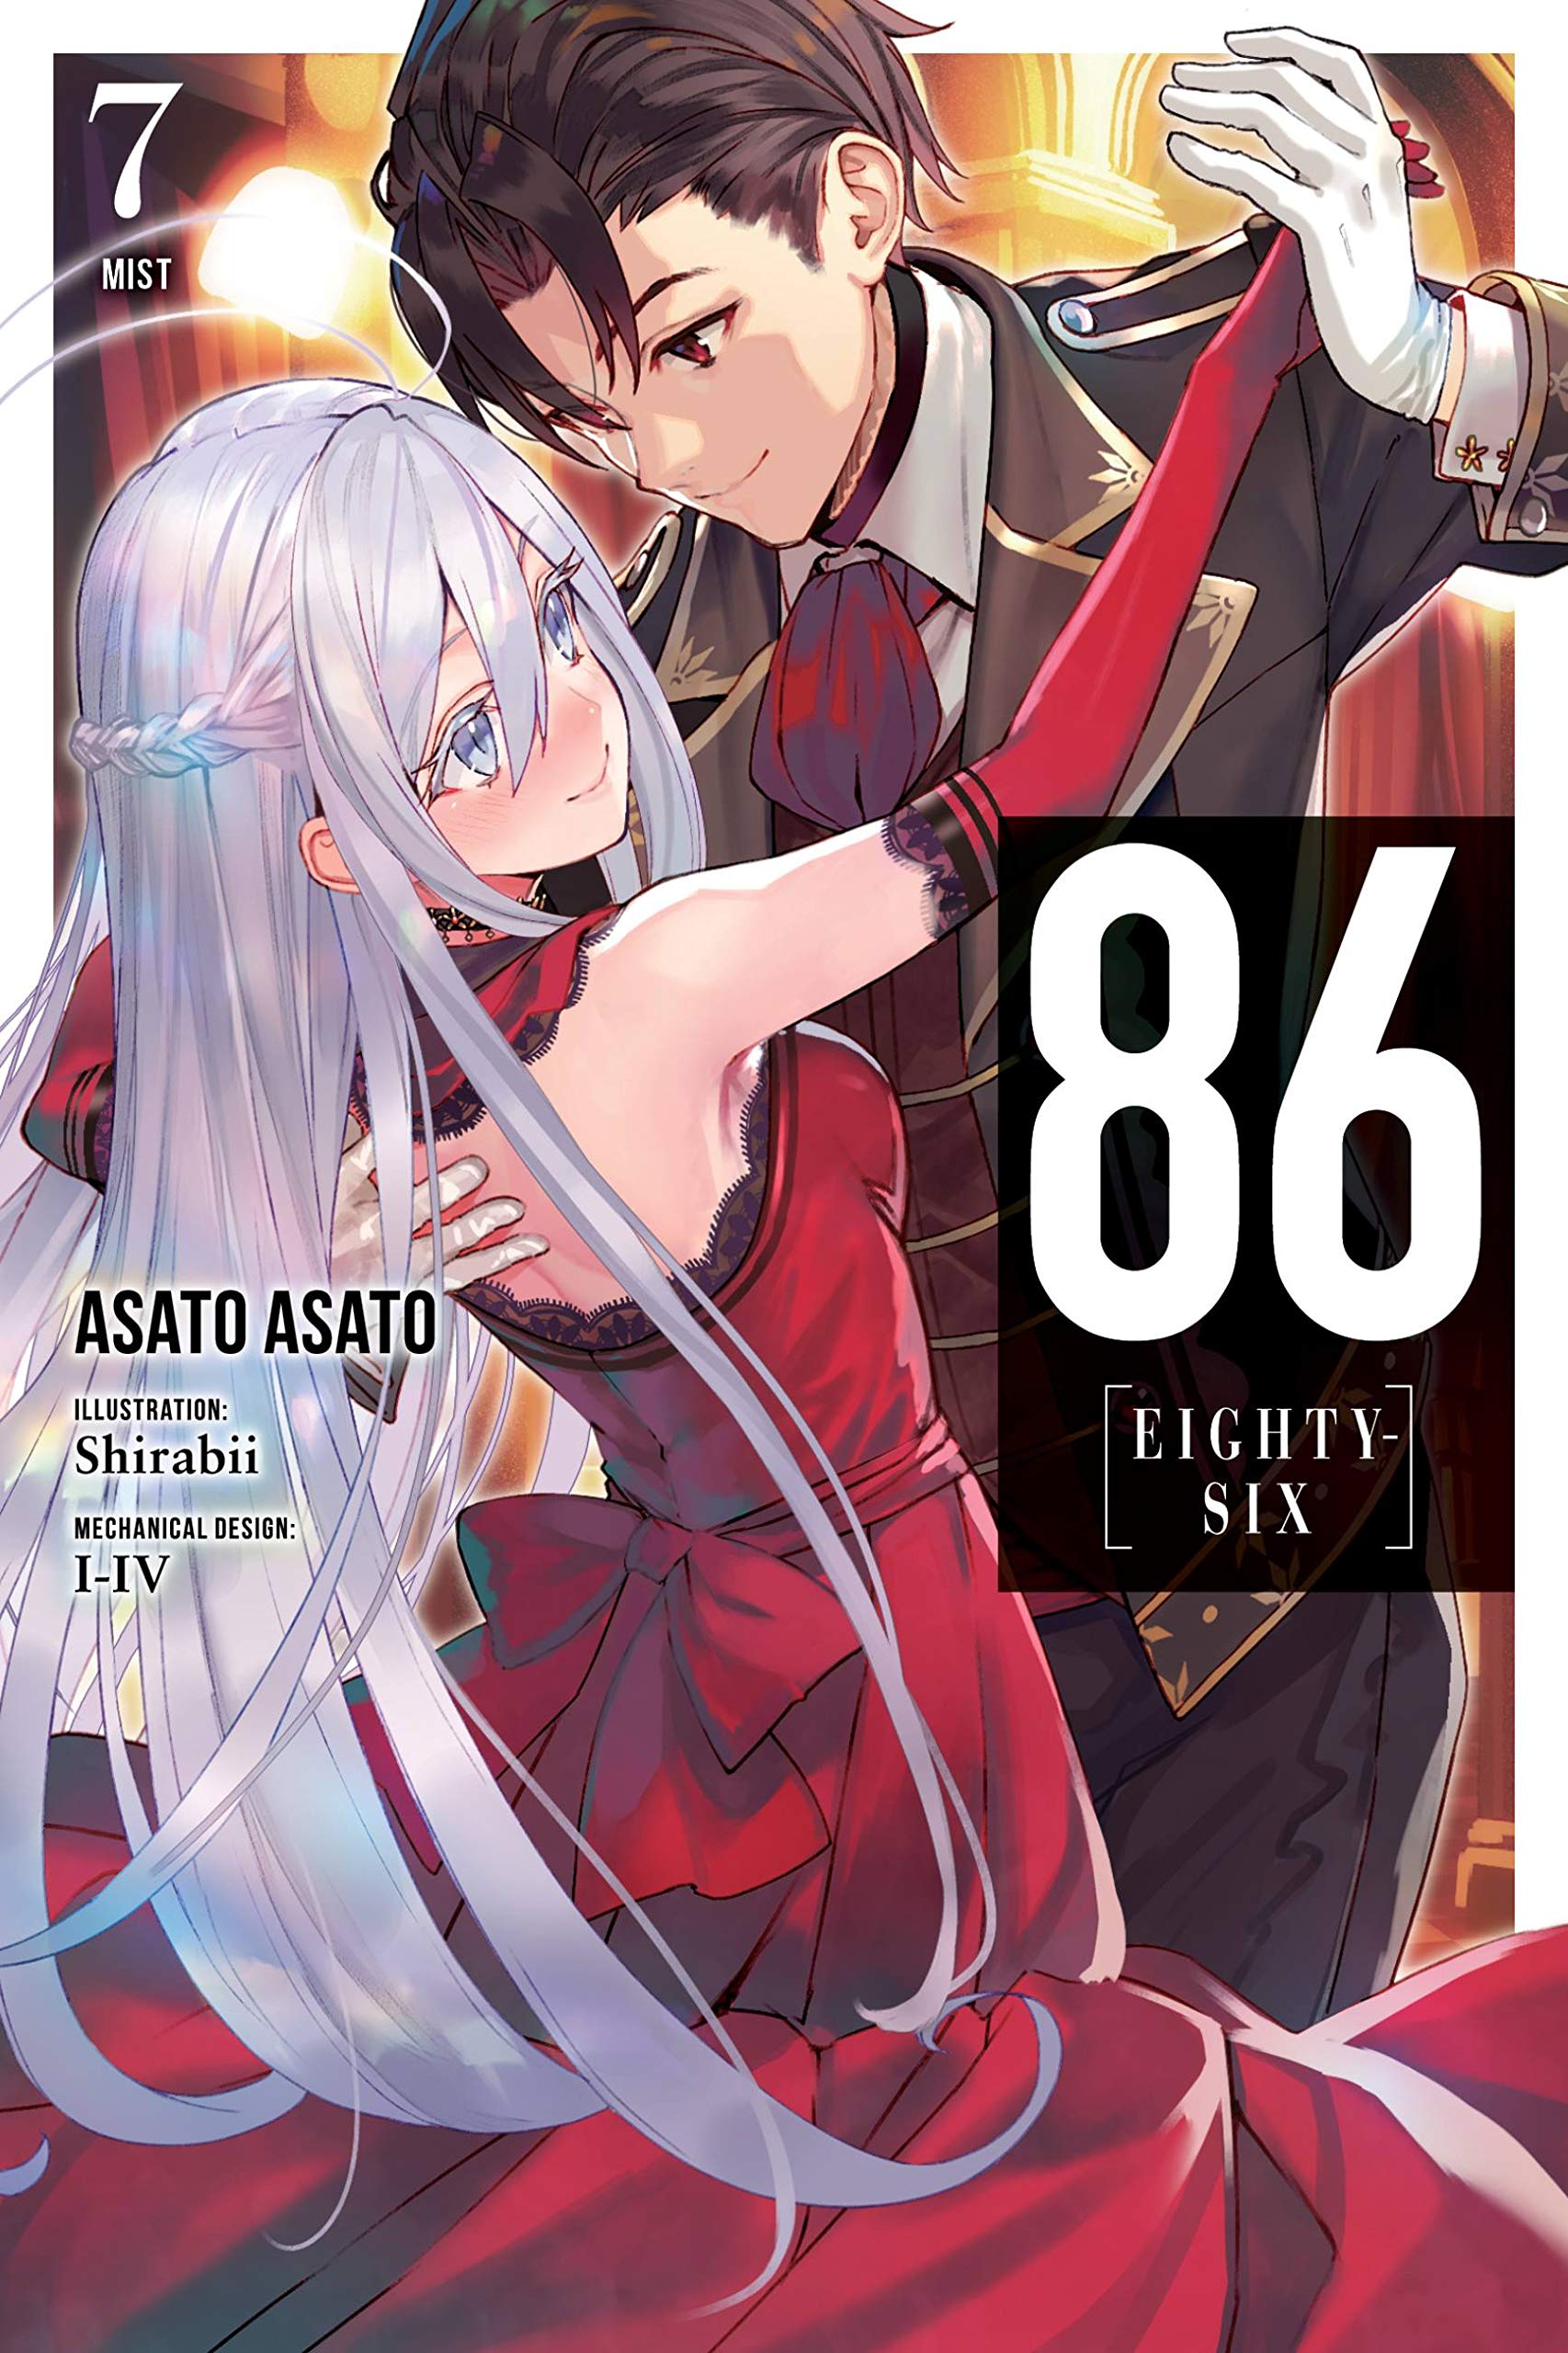 86: Eighty-Six Volume 7 Review • Anime UK News